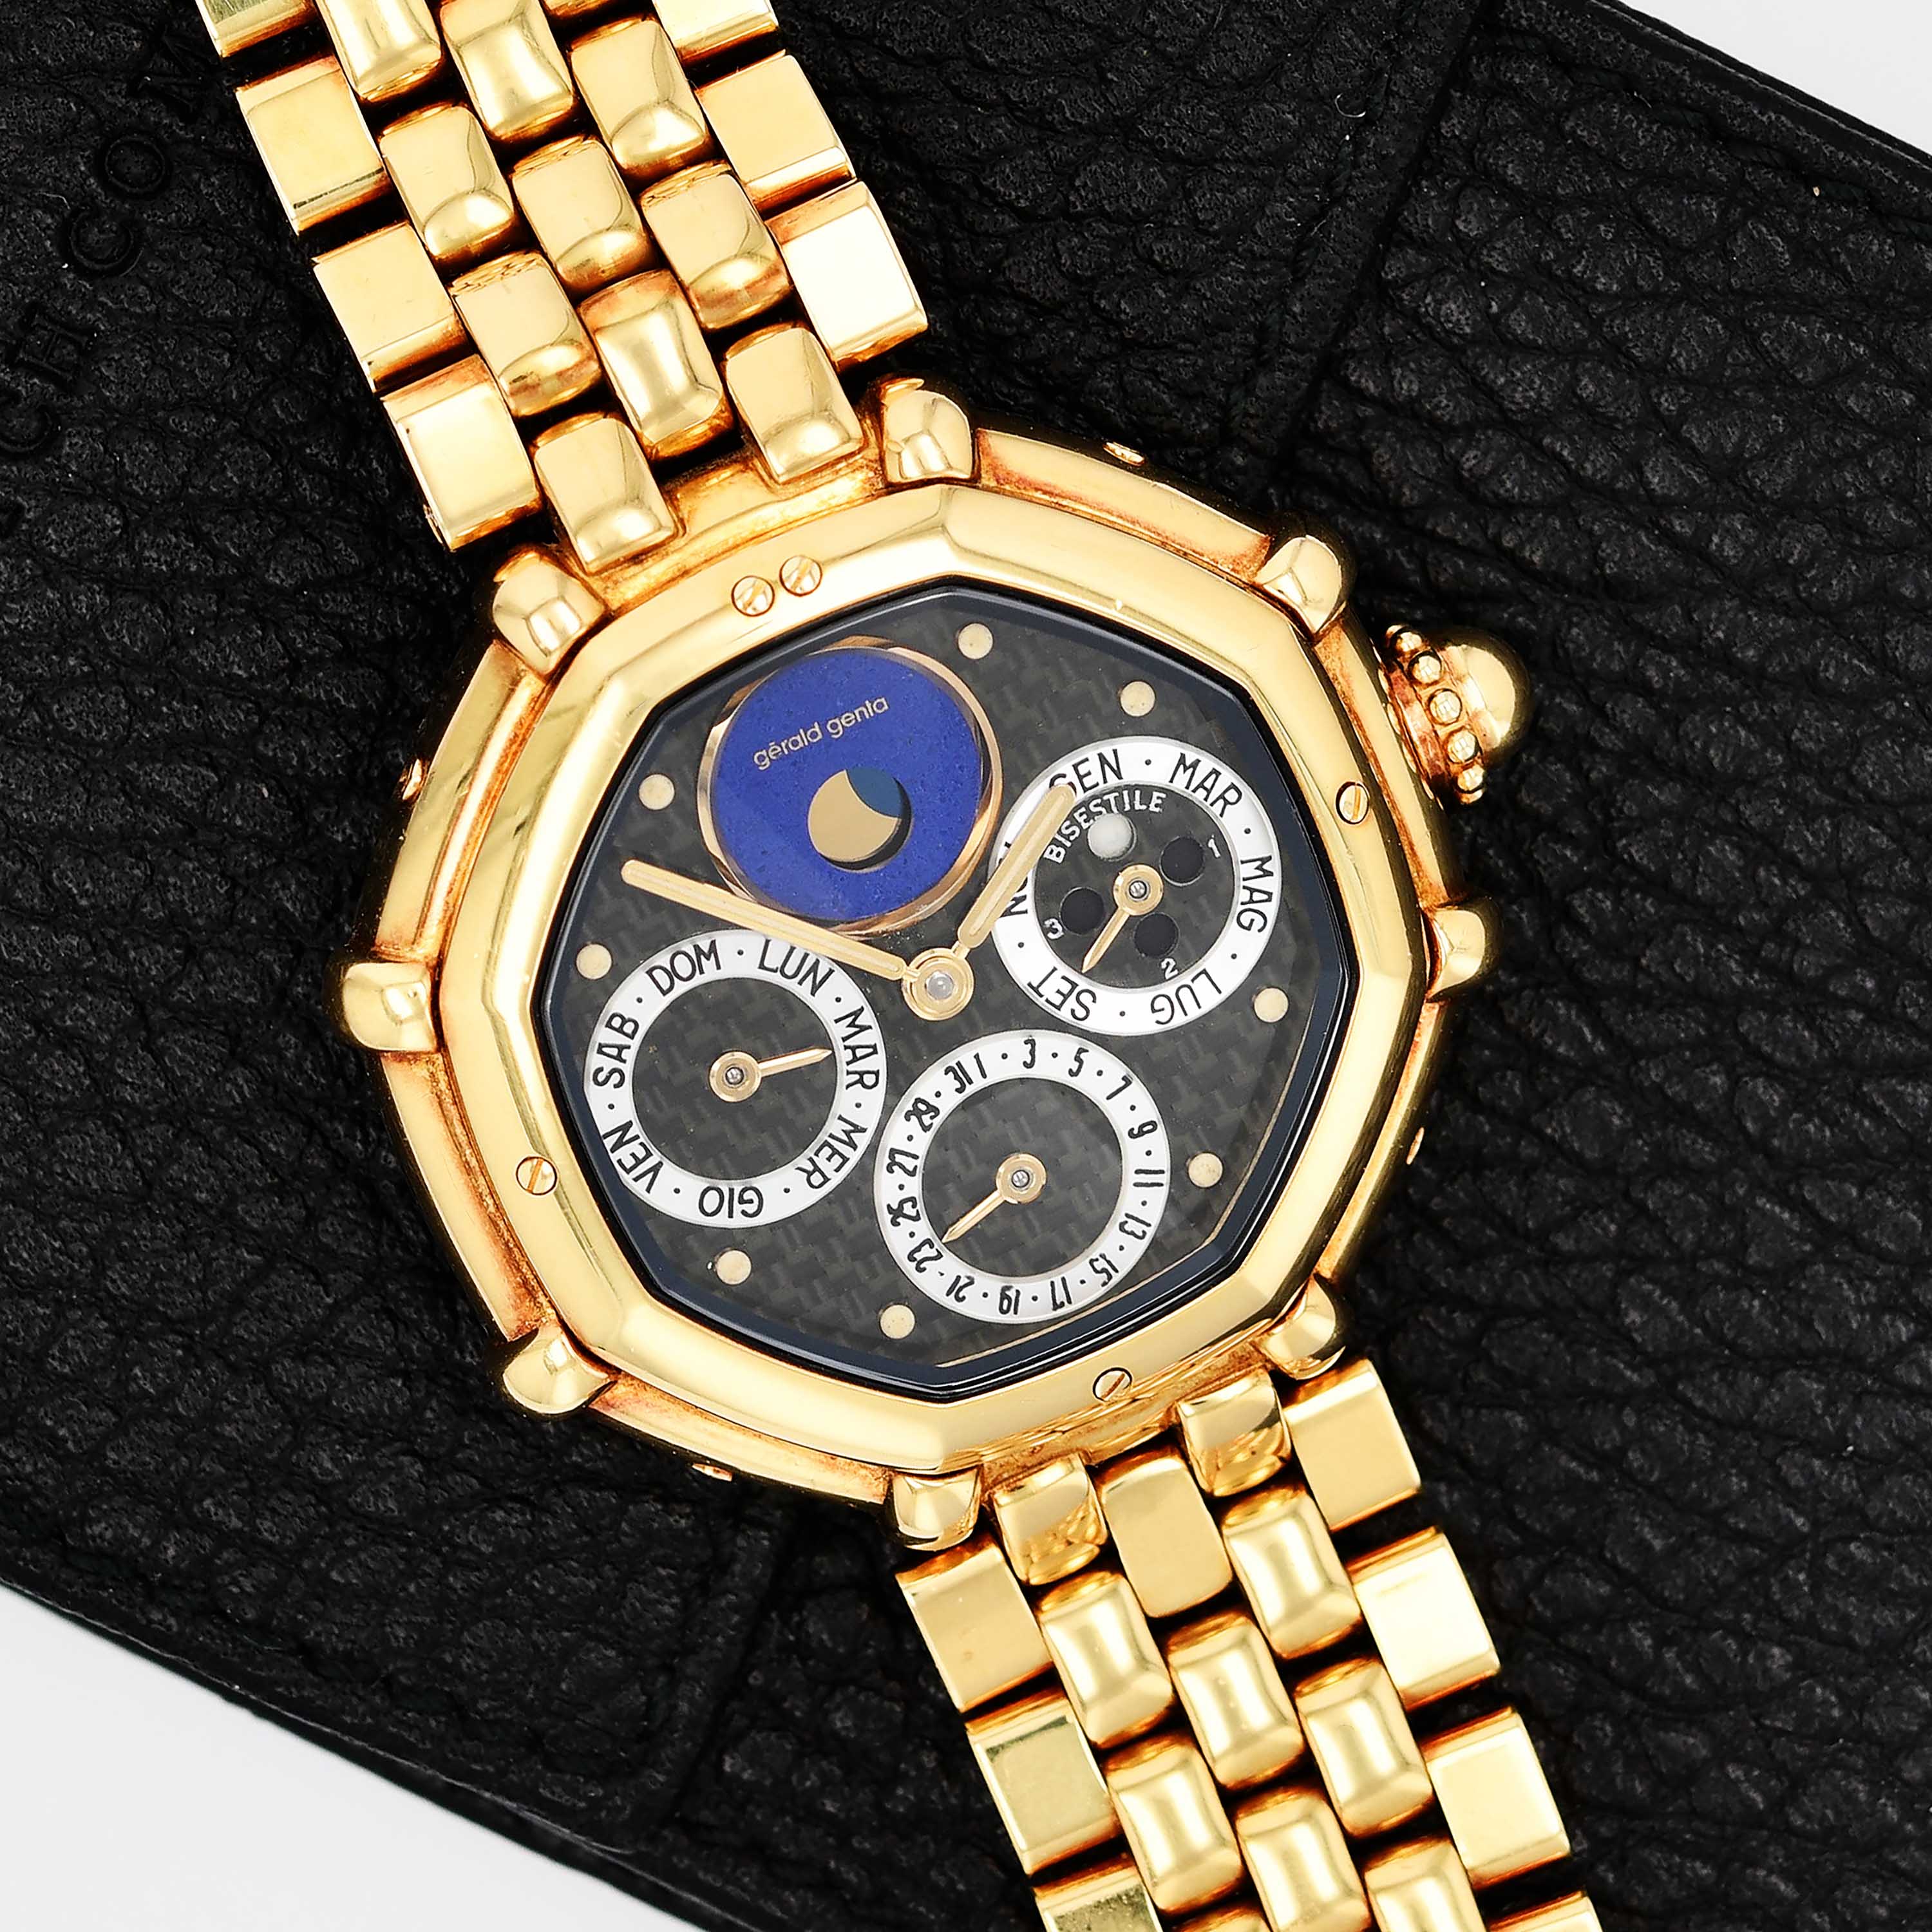 Gerald-genta-success-g33747-automatic-carbon-dial-bracelet-watch-img-main4